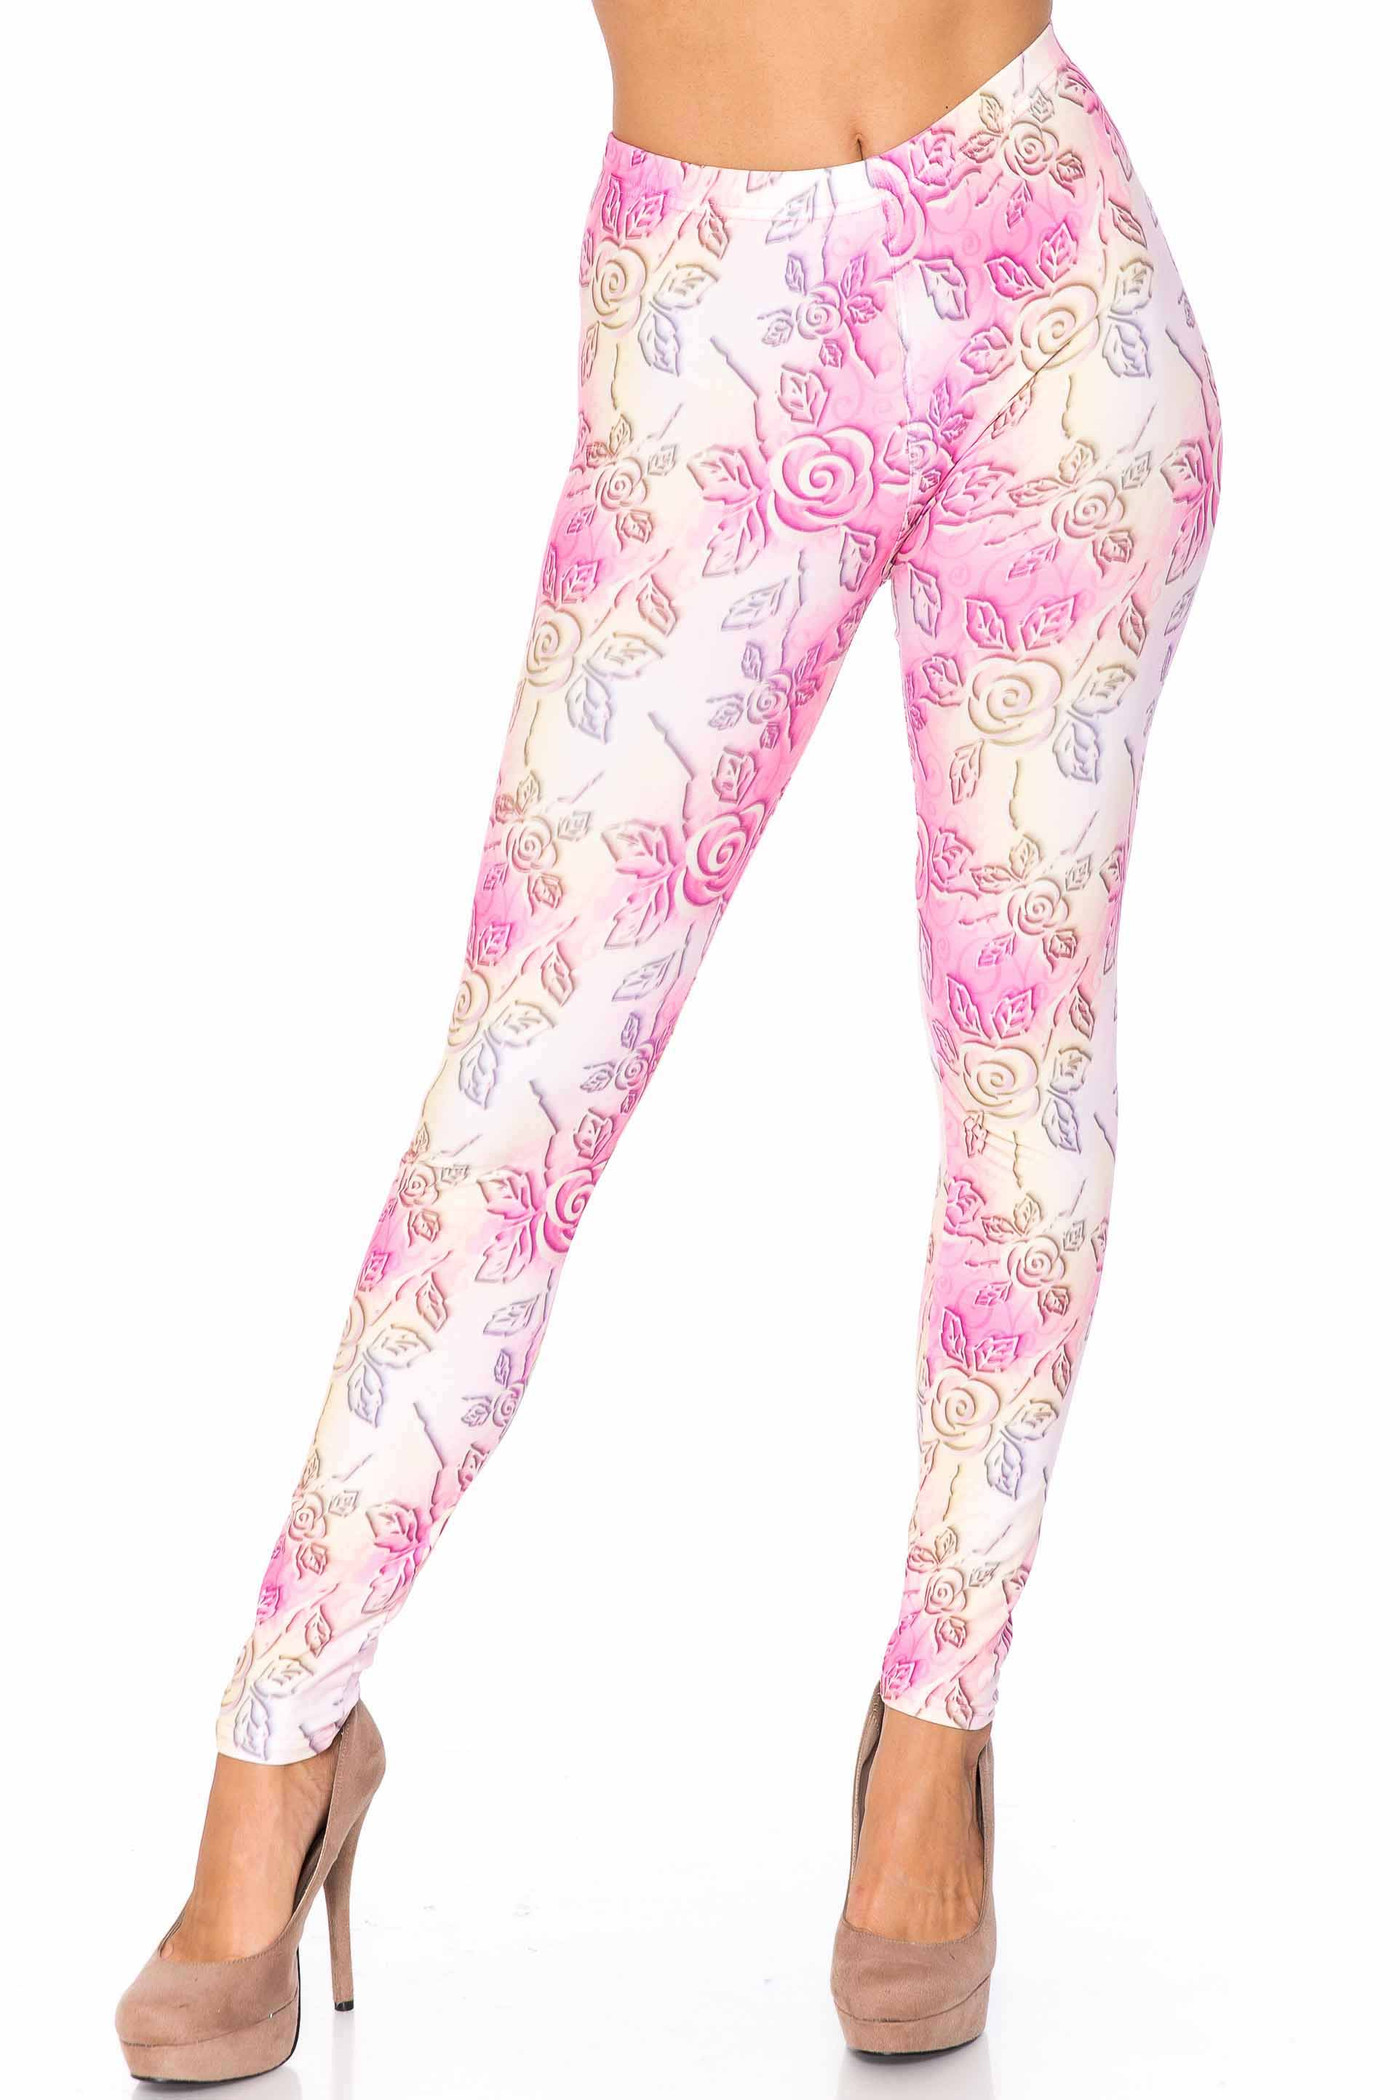 Creamy Soft 3D Pastel Ombre Rose Leggings - USA Fashion™